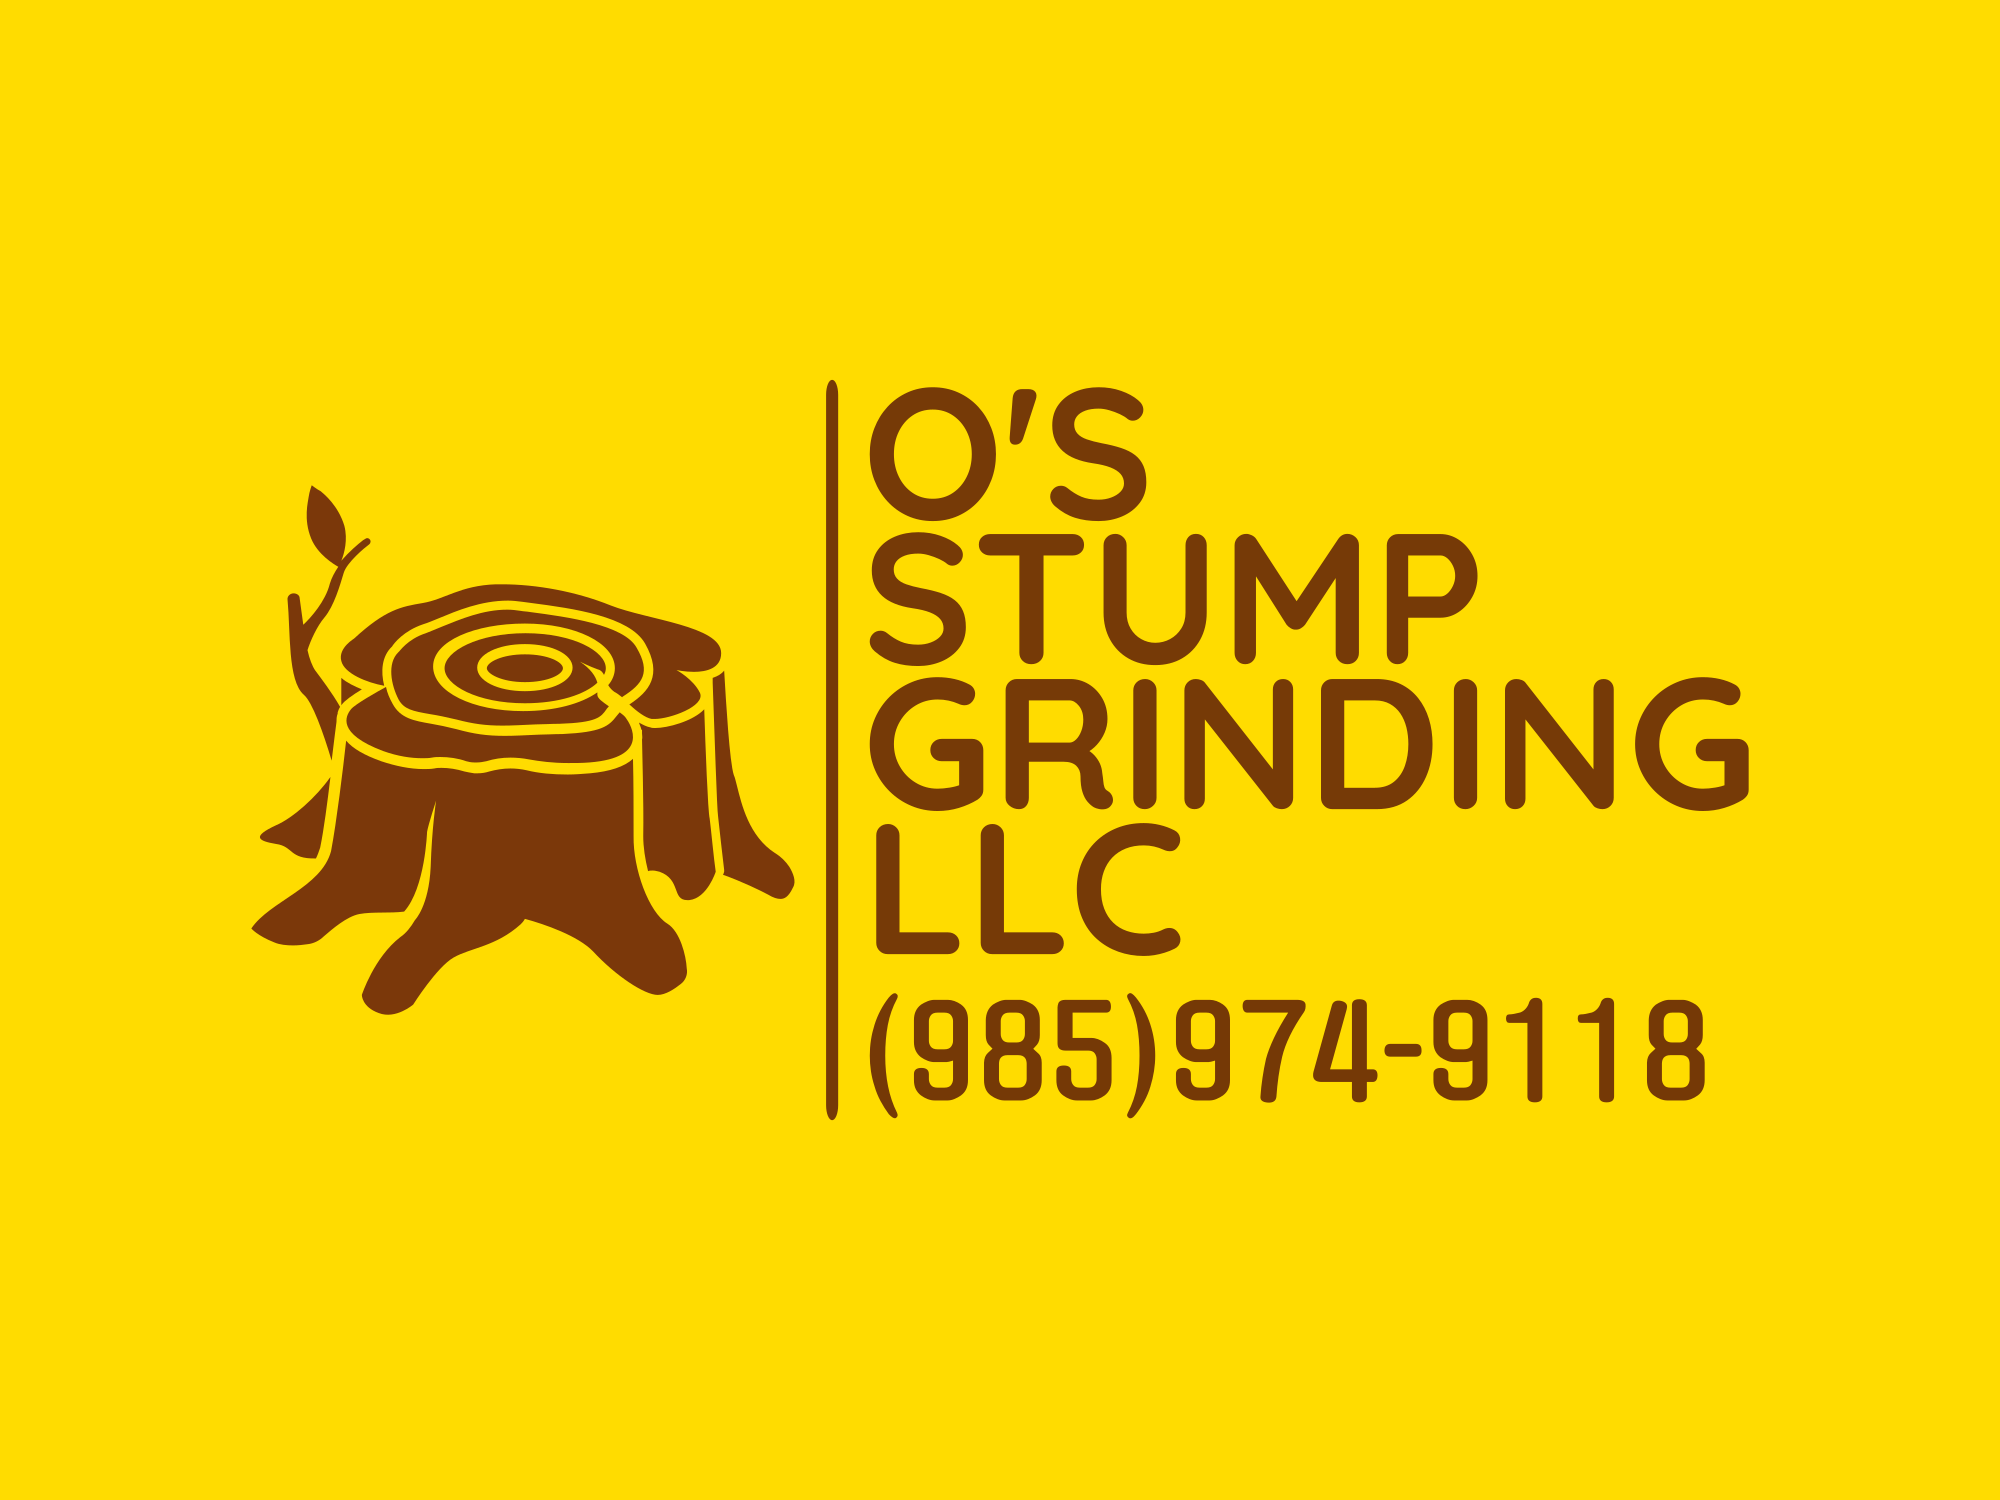 O’s Stump Grinding LLC